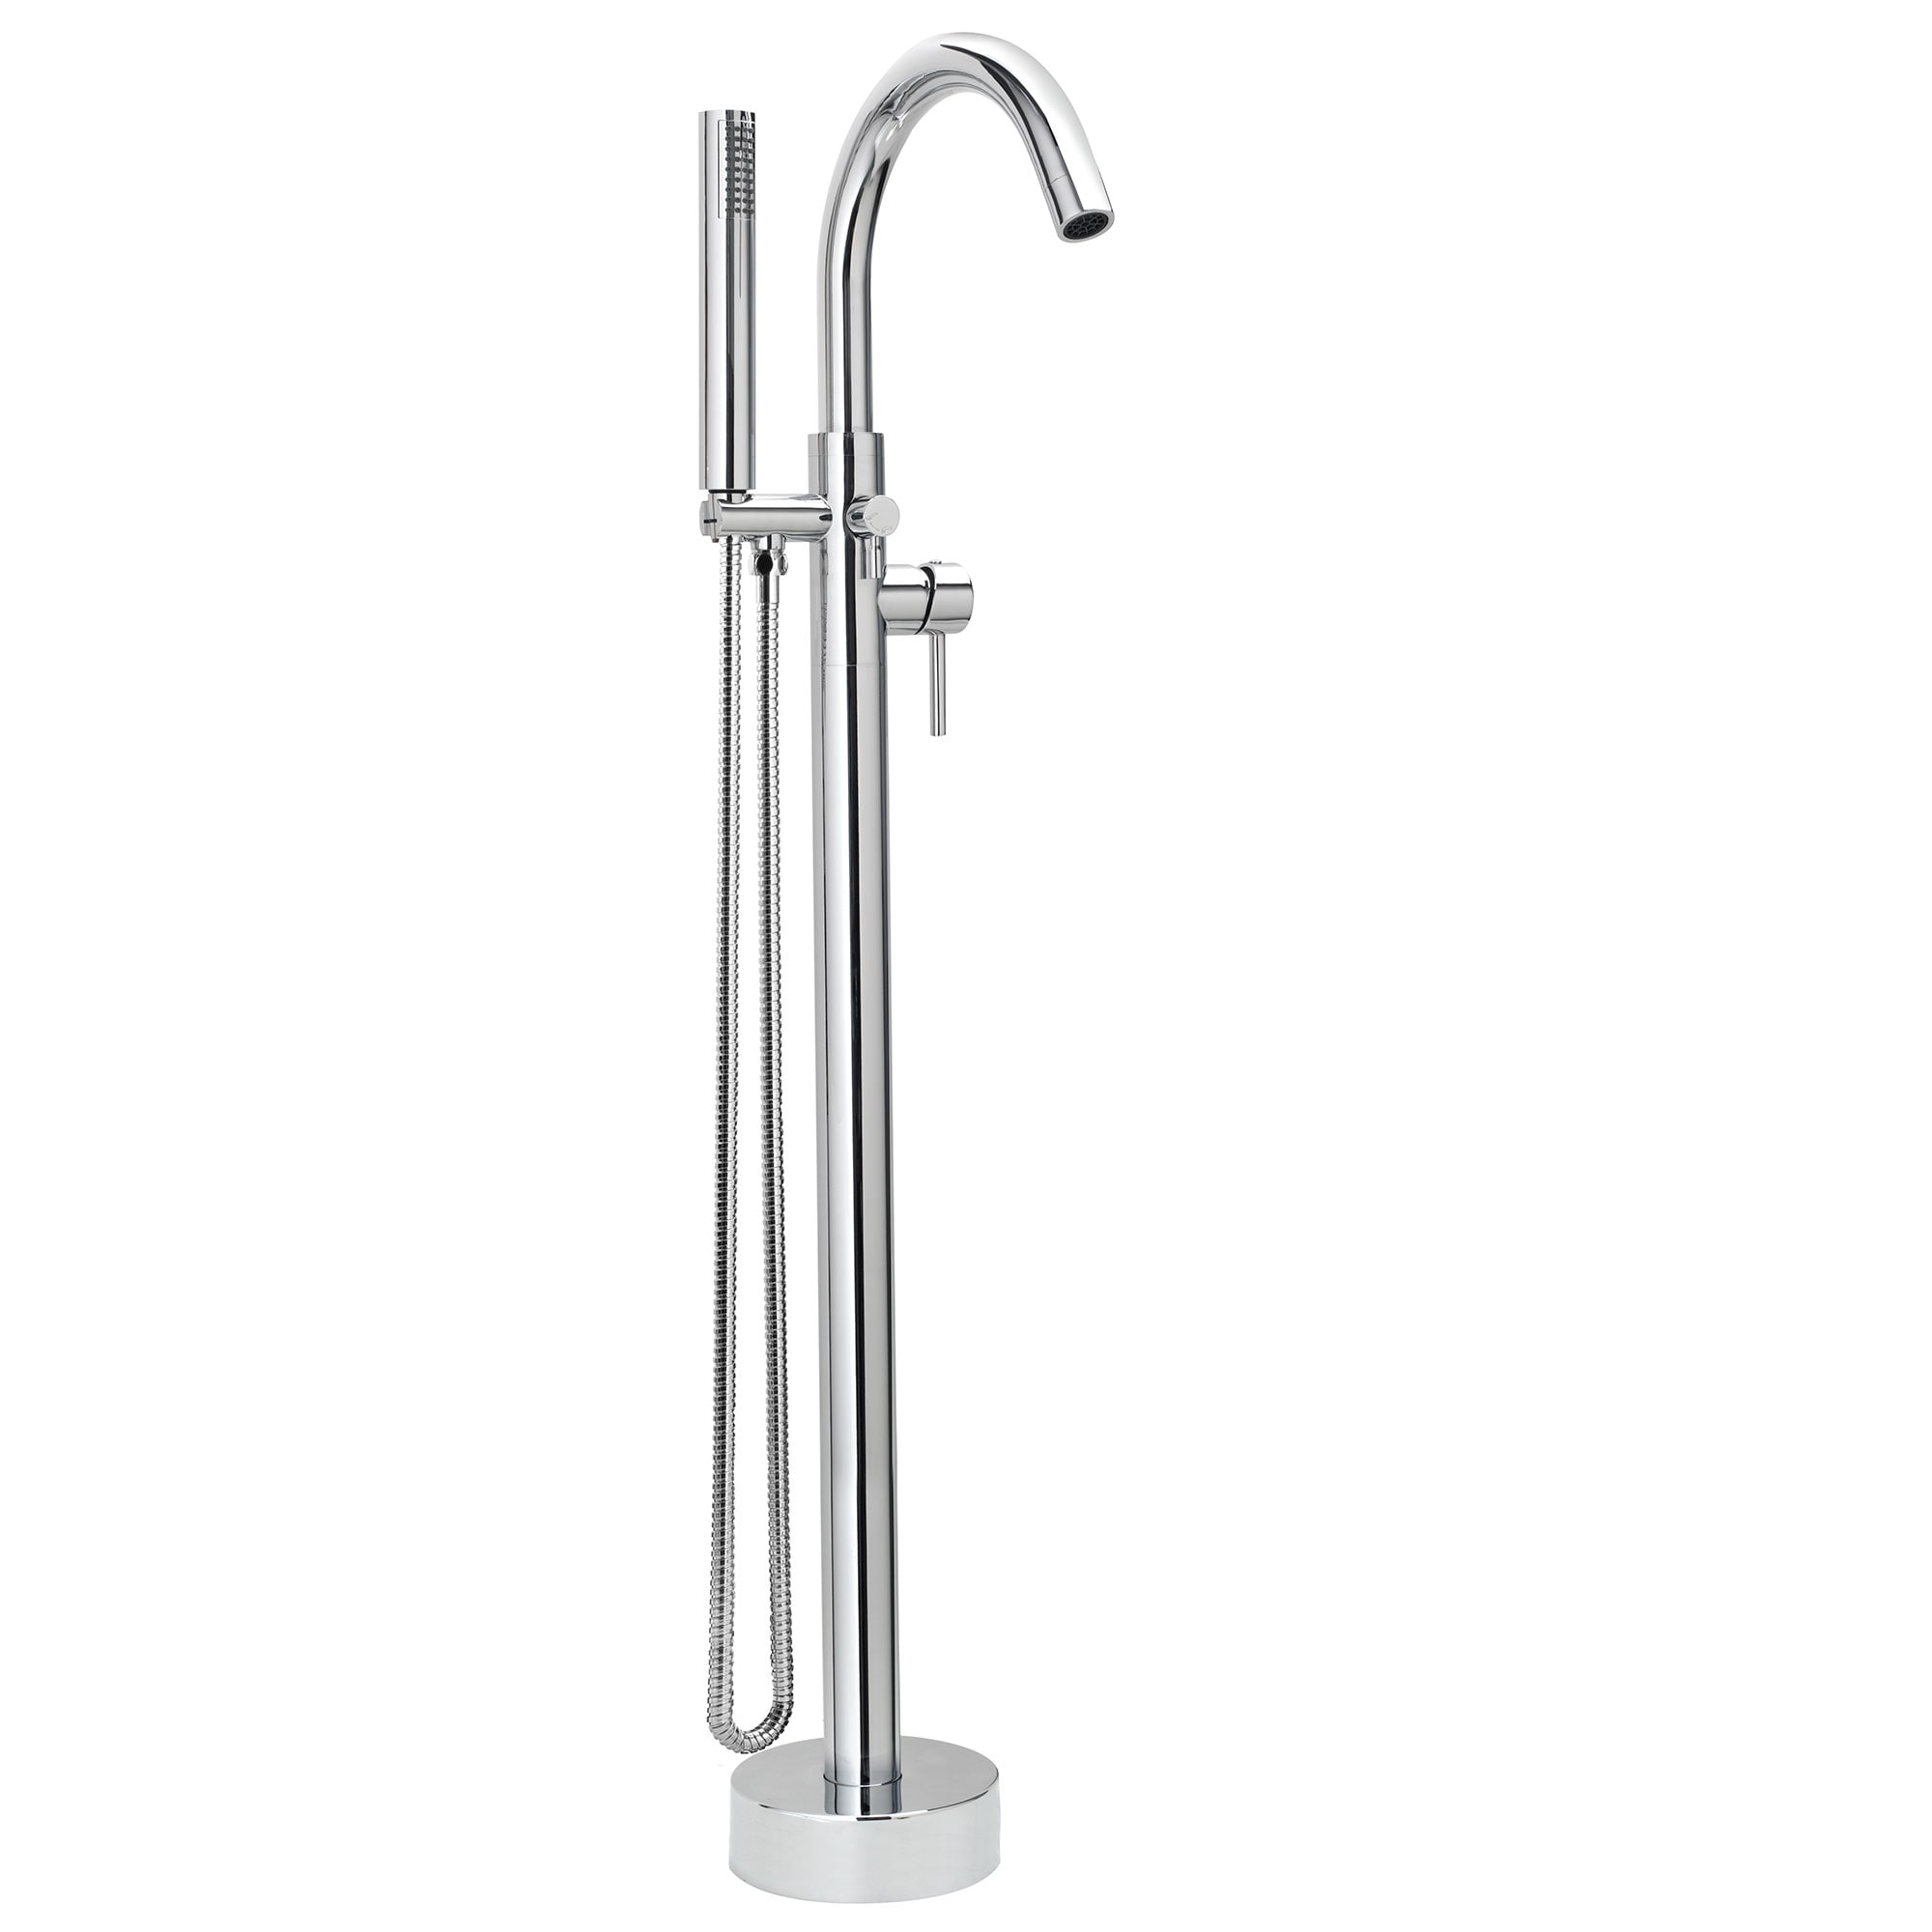 Belanger Delphi Polished Chrome 1-handle Freestanding High-arc Bathtub Faucet with Hand Shower (Valve Included)